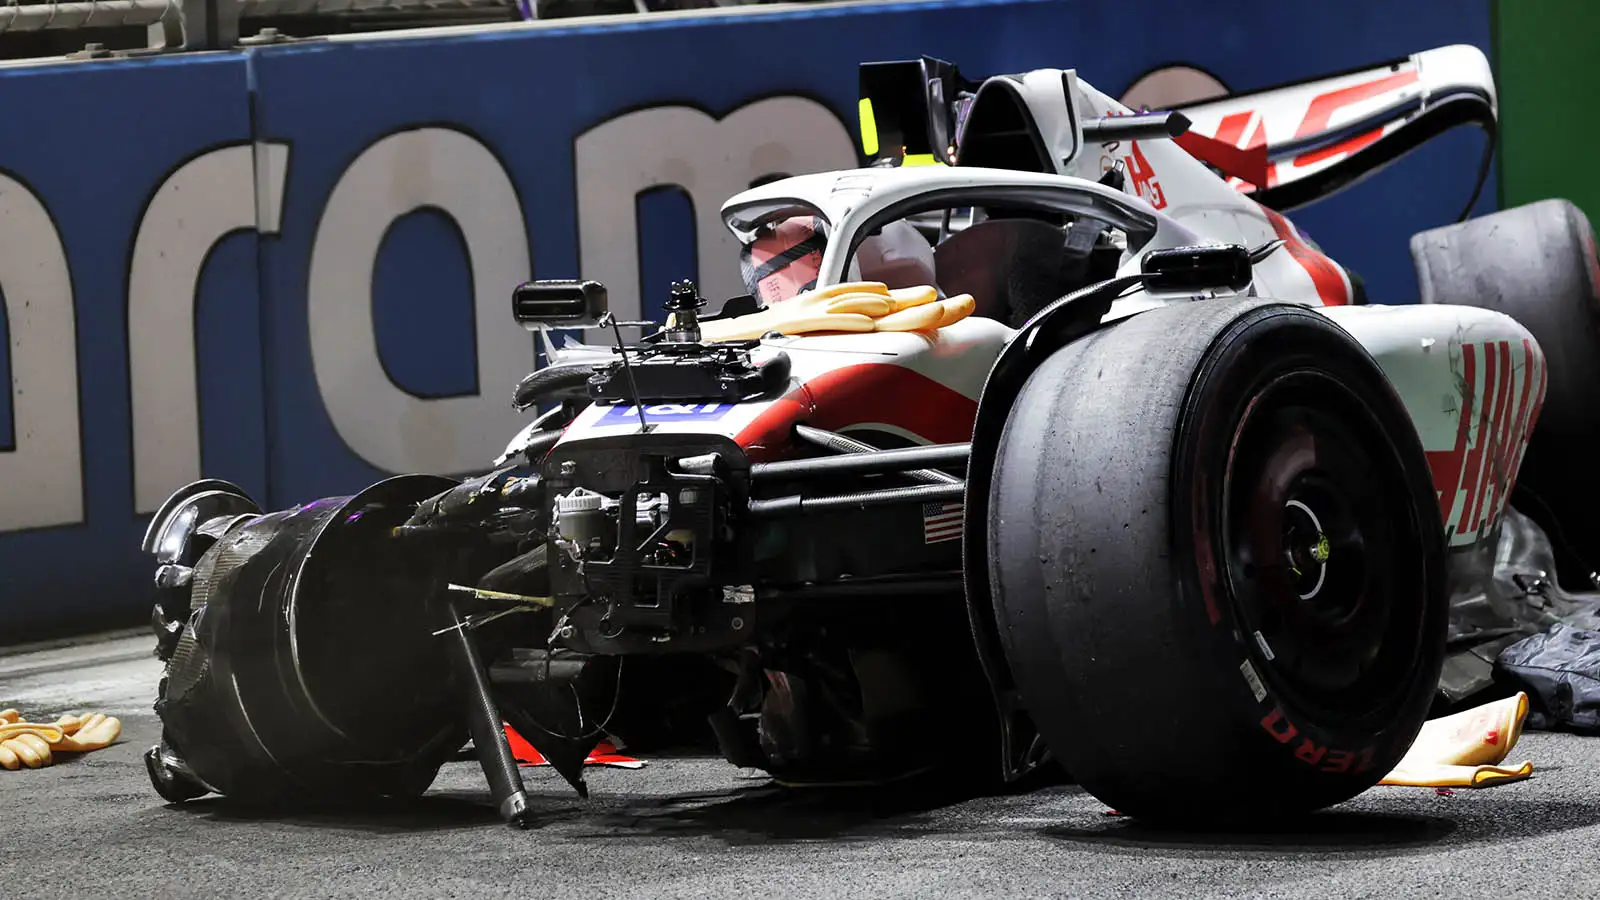 Mick Schumacher's Haas after a huge crash in Q2. Saudi Arabia March 2022